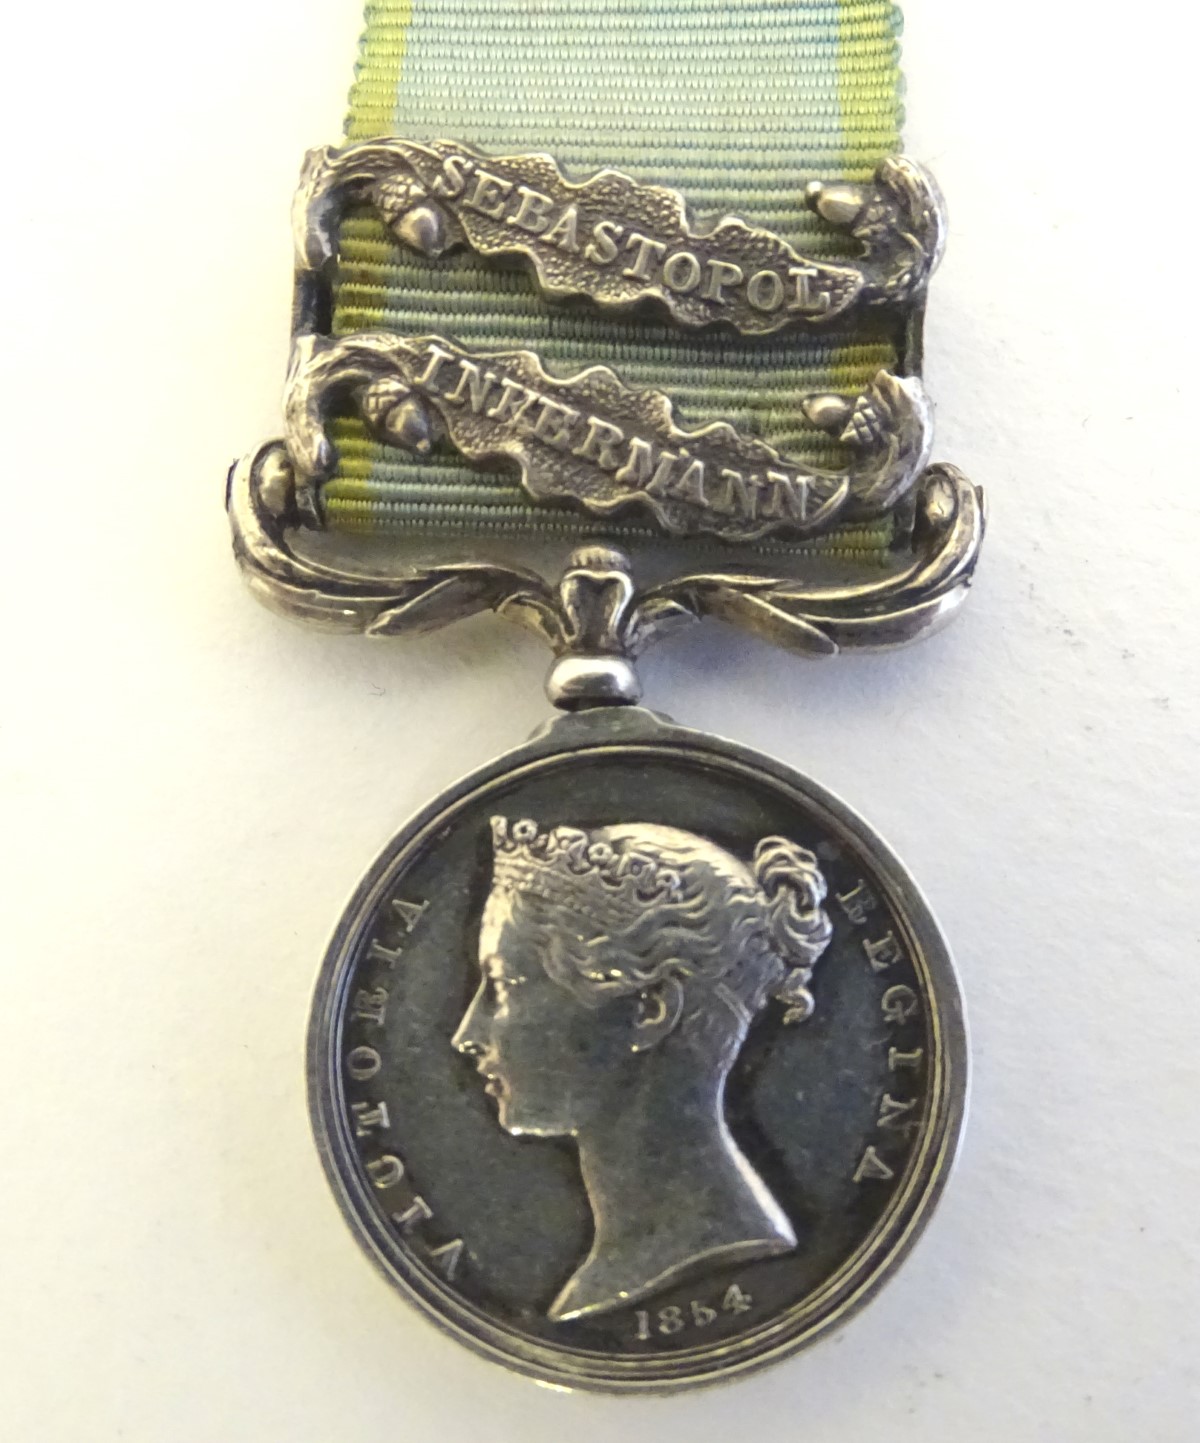 Militaria: a Victorian miniature Crimea Medal, with Sebastopol and Inkermann bars. 2" long ( - Image 7 of 7